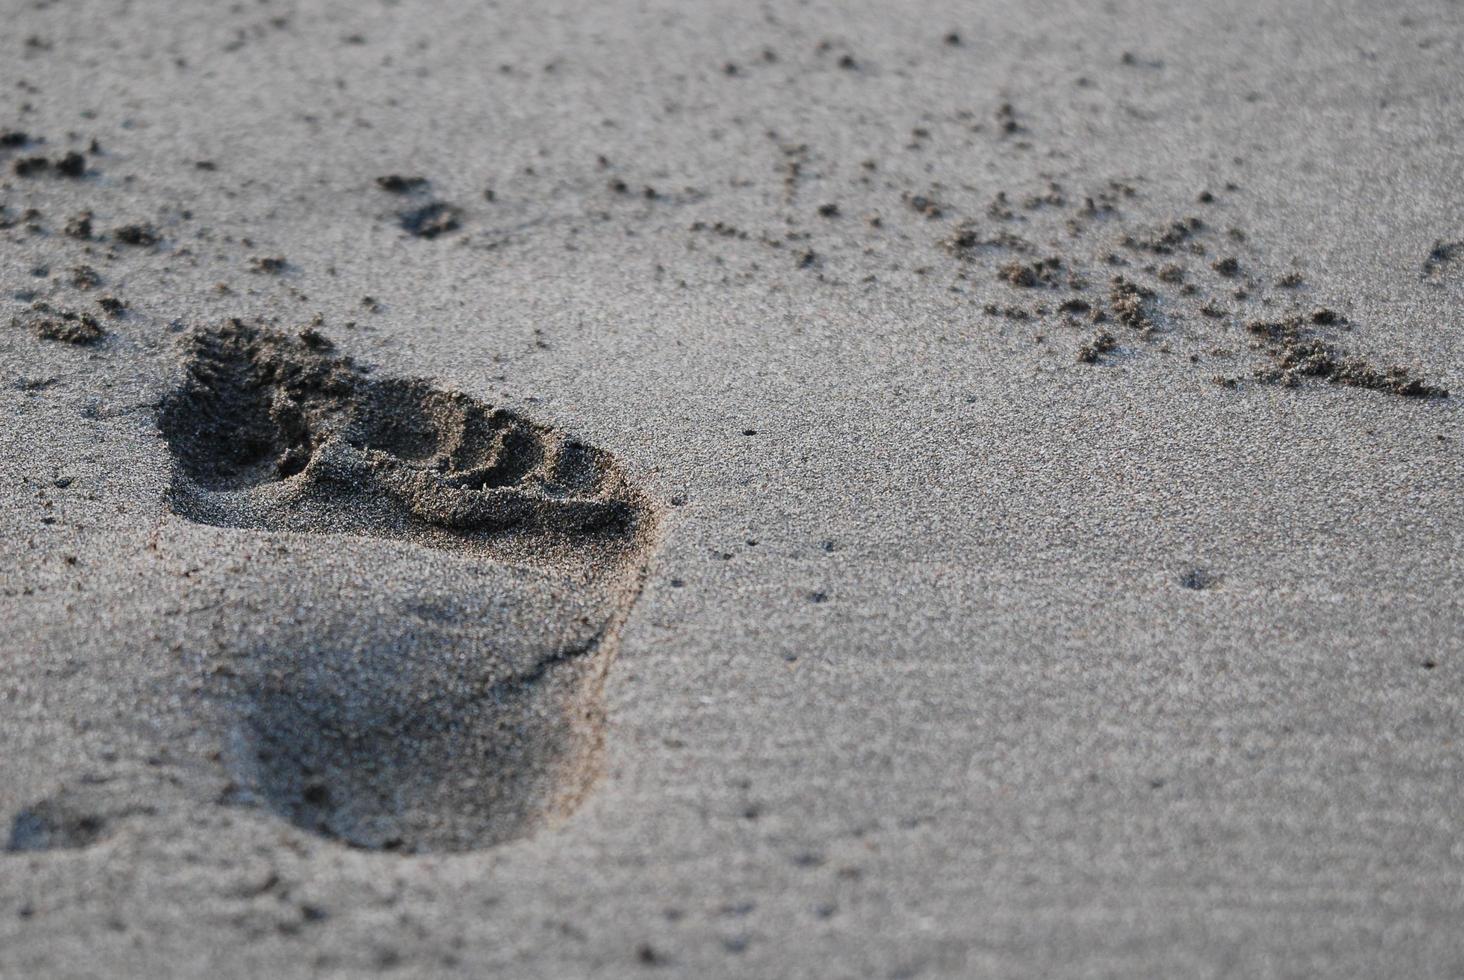 Footprint in sand photo